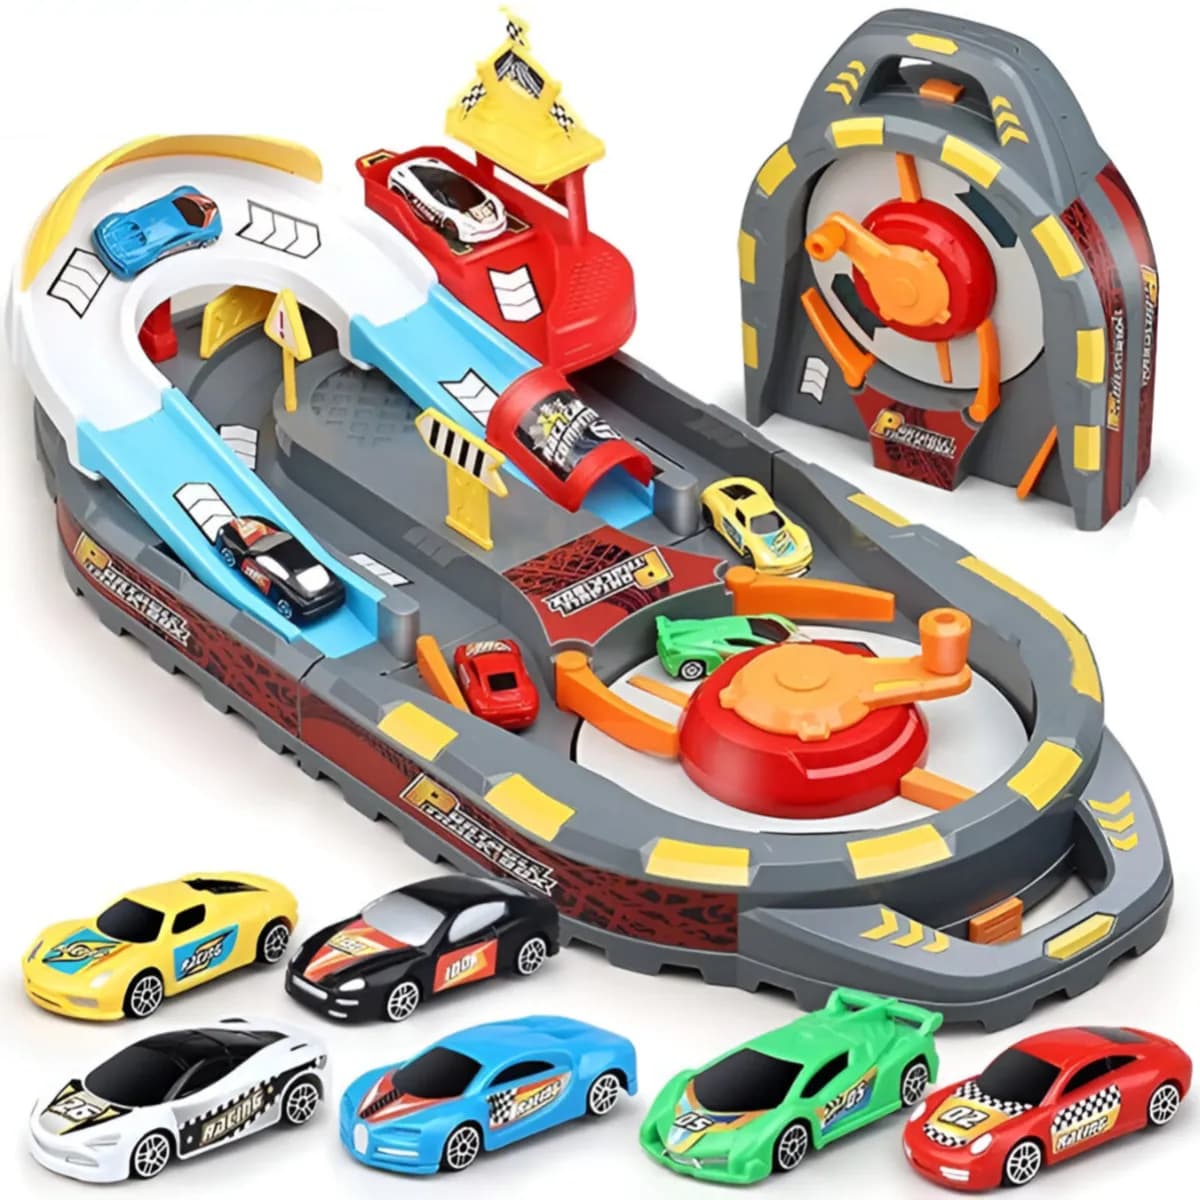 Racing Carousel Racing Car Parking Lot Toys Racing Track Paly Set For Kids - (PSWD40)